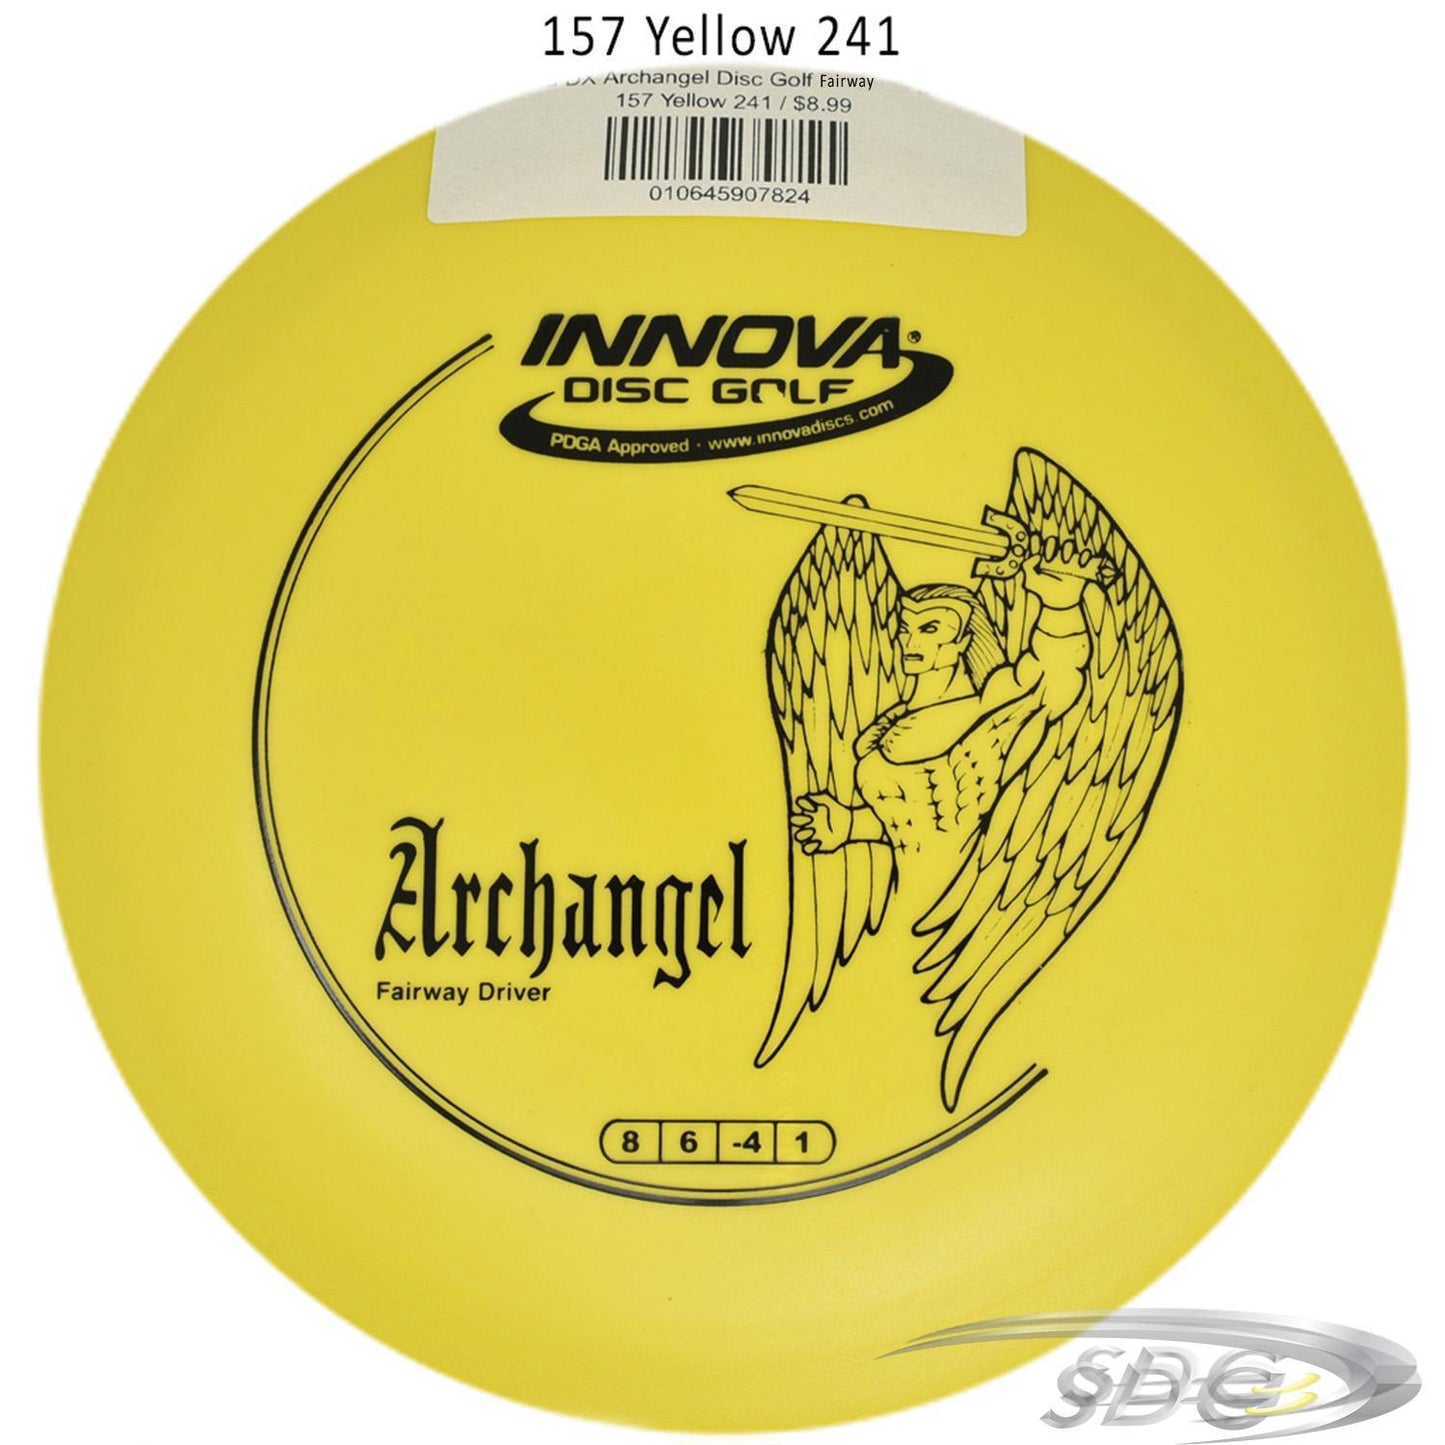 innova-dx-archangel-disc-golf-fairway-driver 157 Yellow 241 